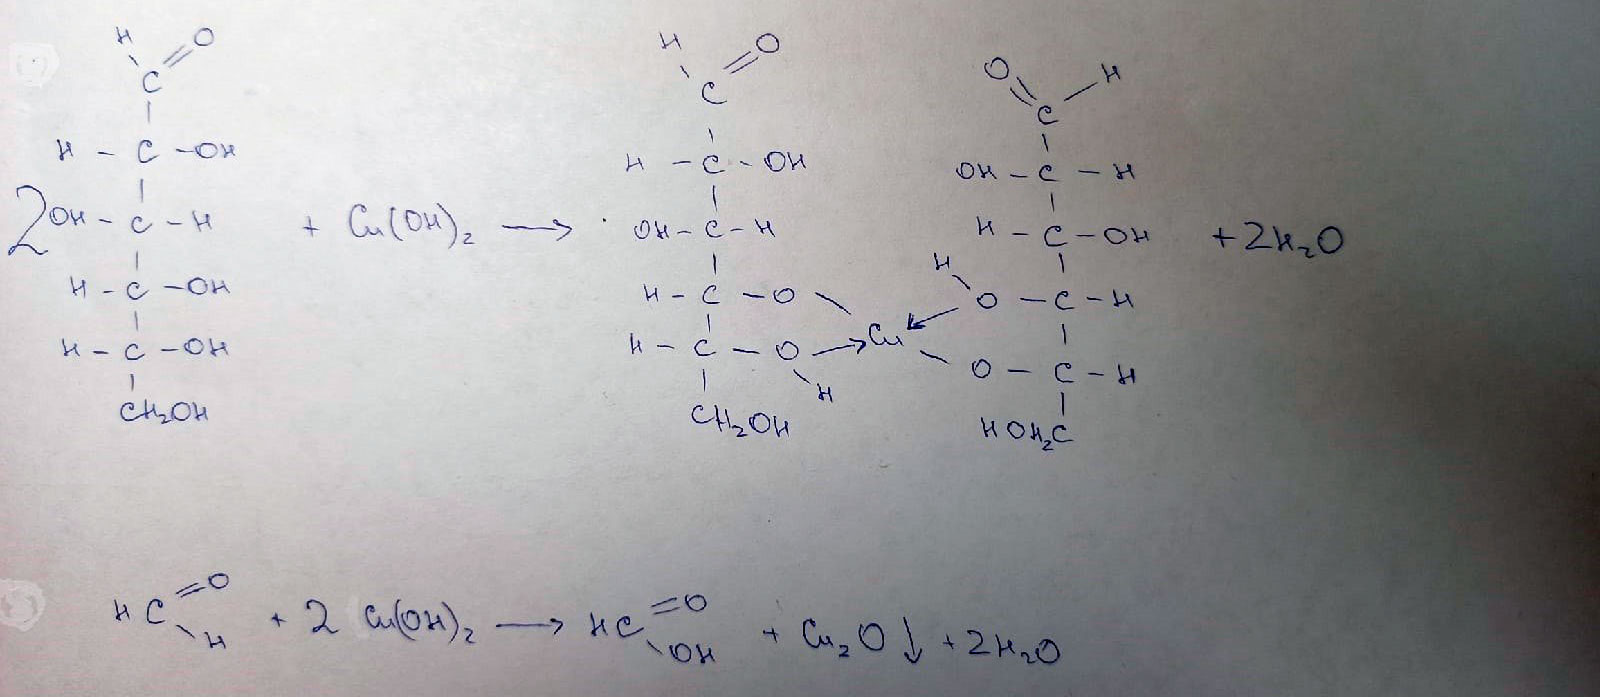 Гидроксид меди 2 и гидроксид аммония. Триолеат глицерина и гидроксид меди 2. Глицин с гидроксидом меди 2. Реакция глицерина с гидроксидом меди 2. Глюкоза и гидроксид меди 2.